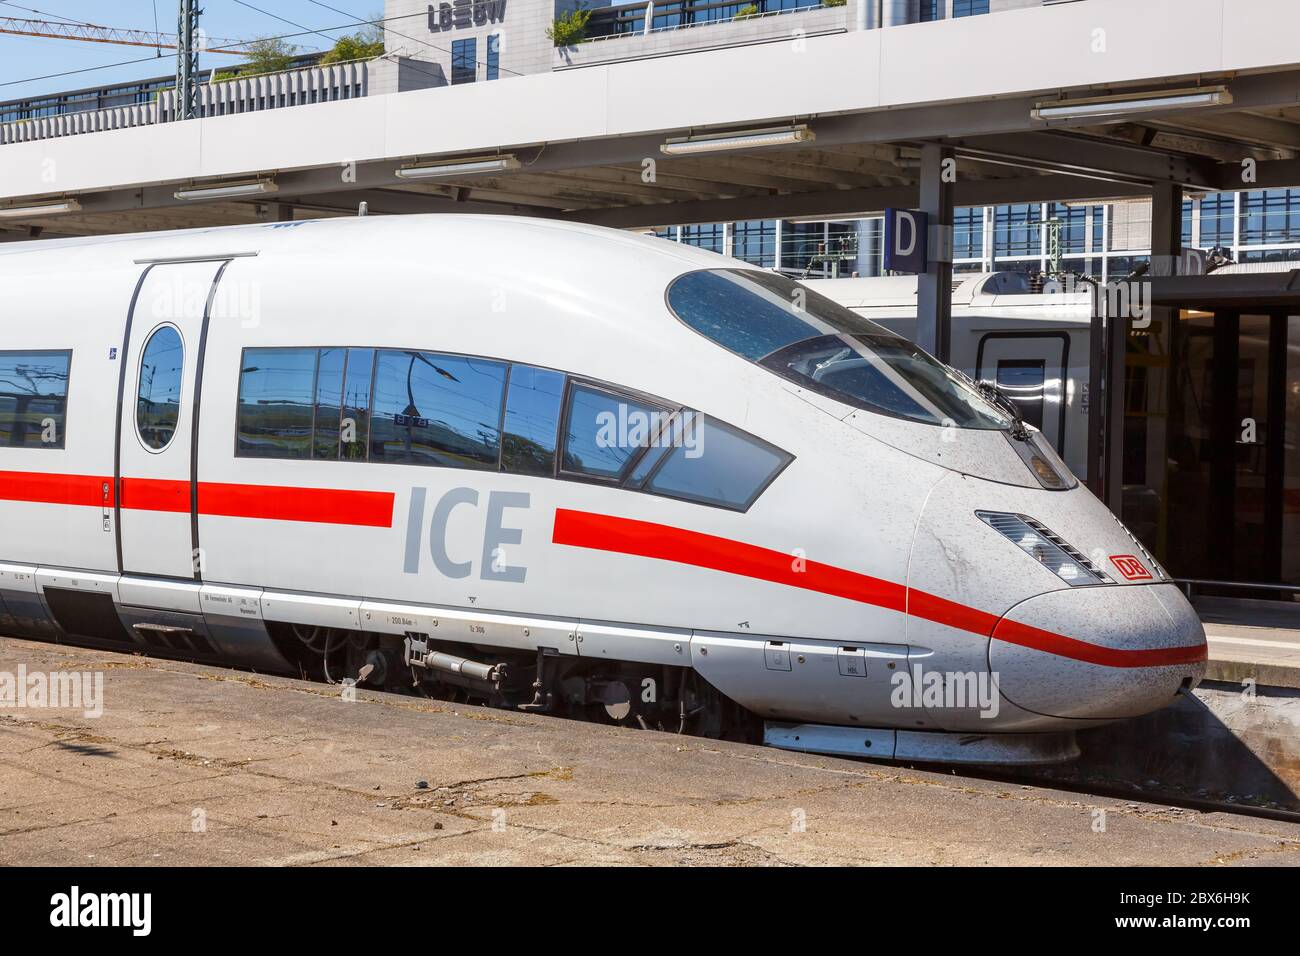 Stuttgart, Germany - April 22, 2020: ICE 3 train railcar locomotive at Stuttgart main station railway in Germany. Stock Photo